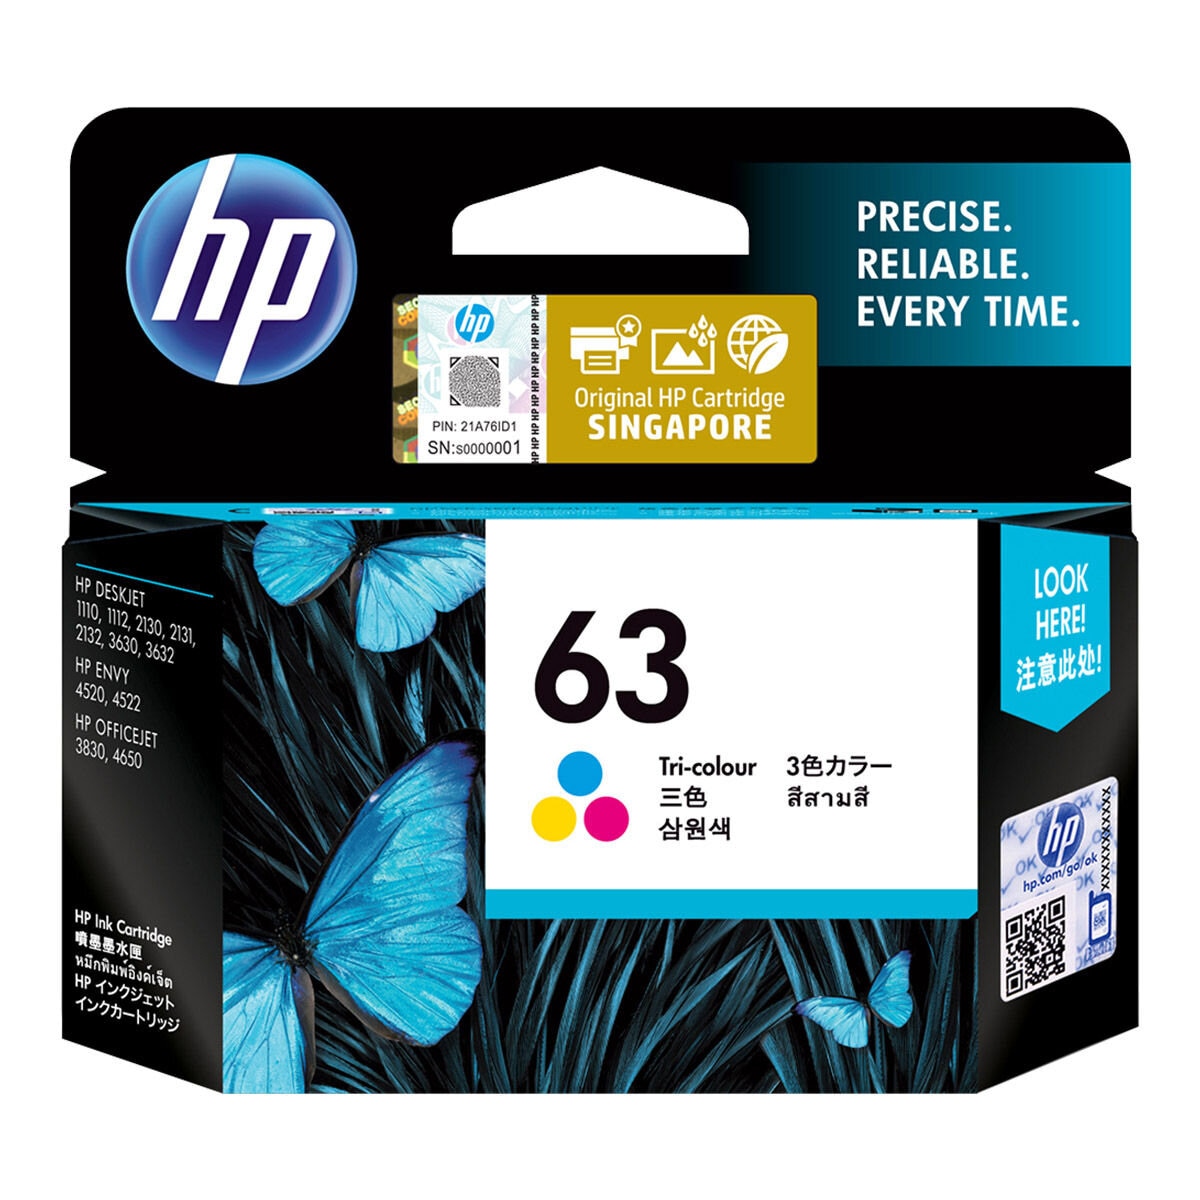 HP 63XL 墨水組合 - 黑 X 1 + 彩色組 X 1